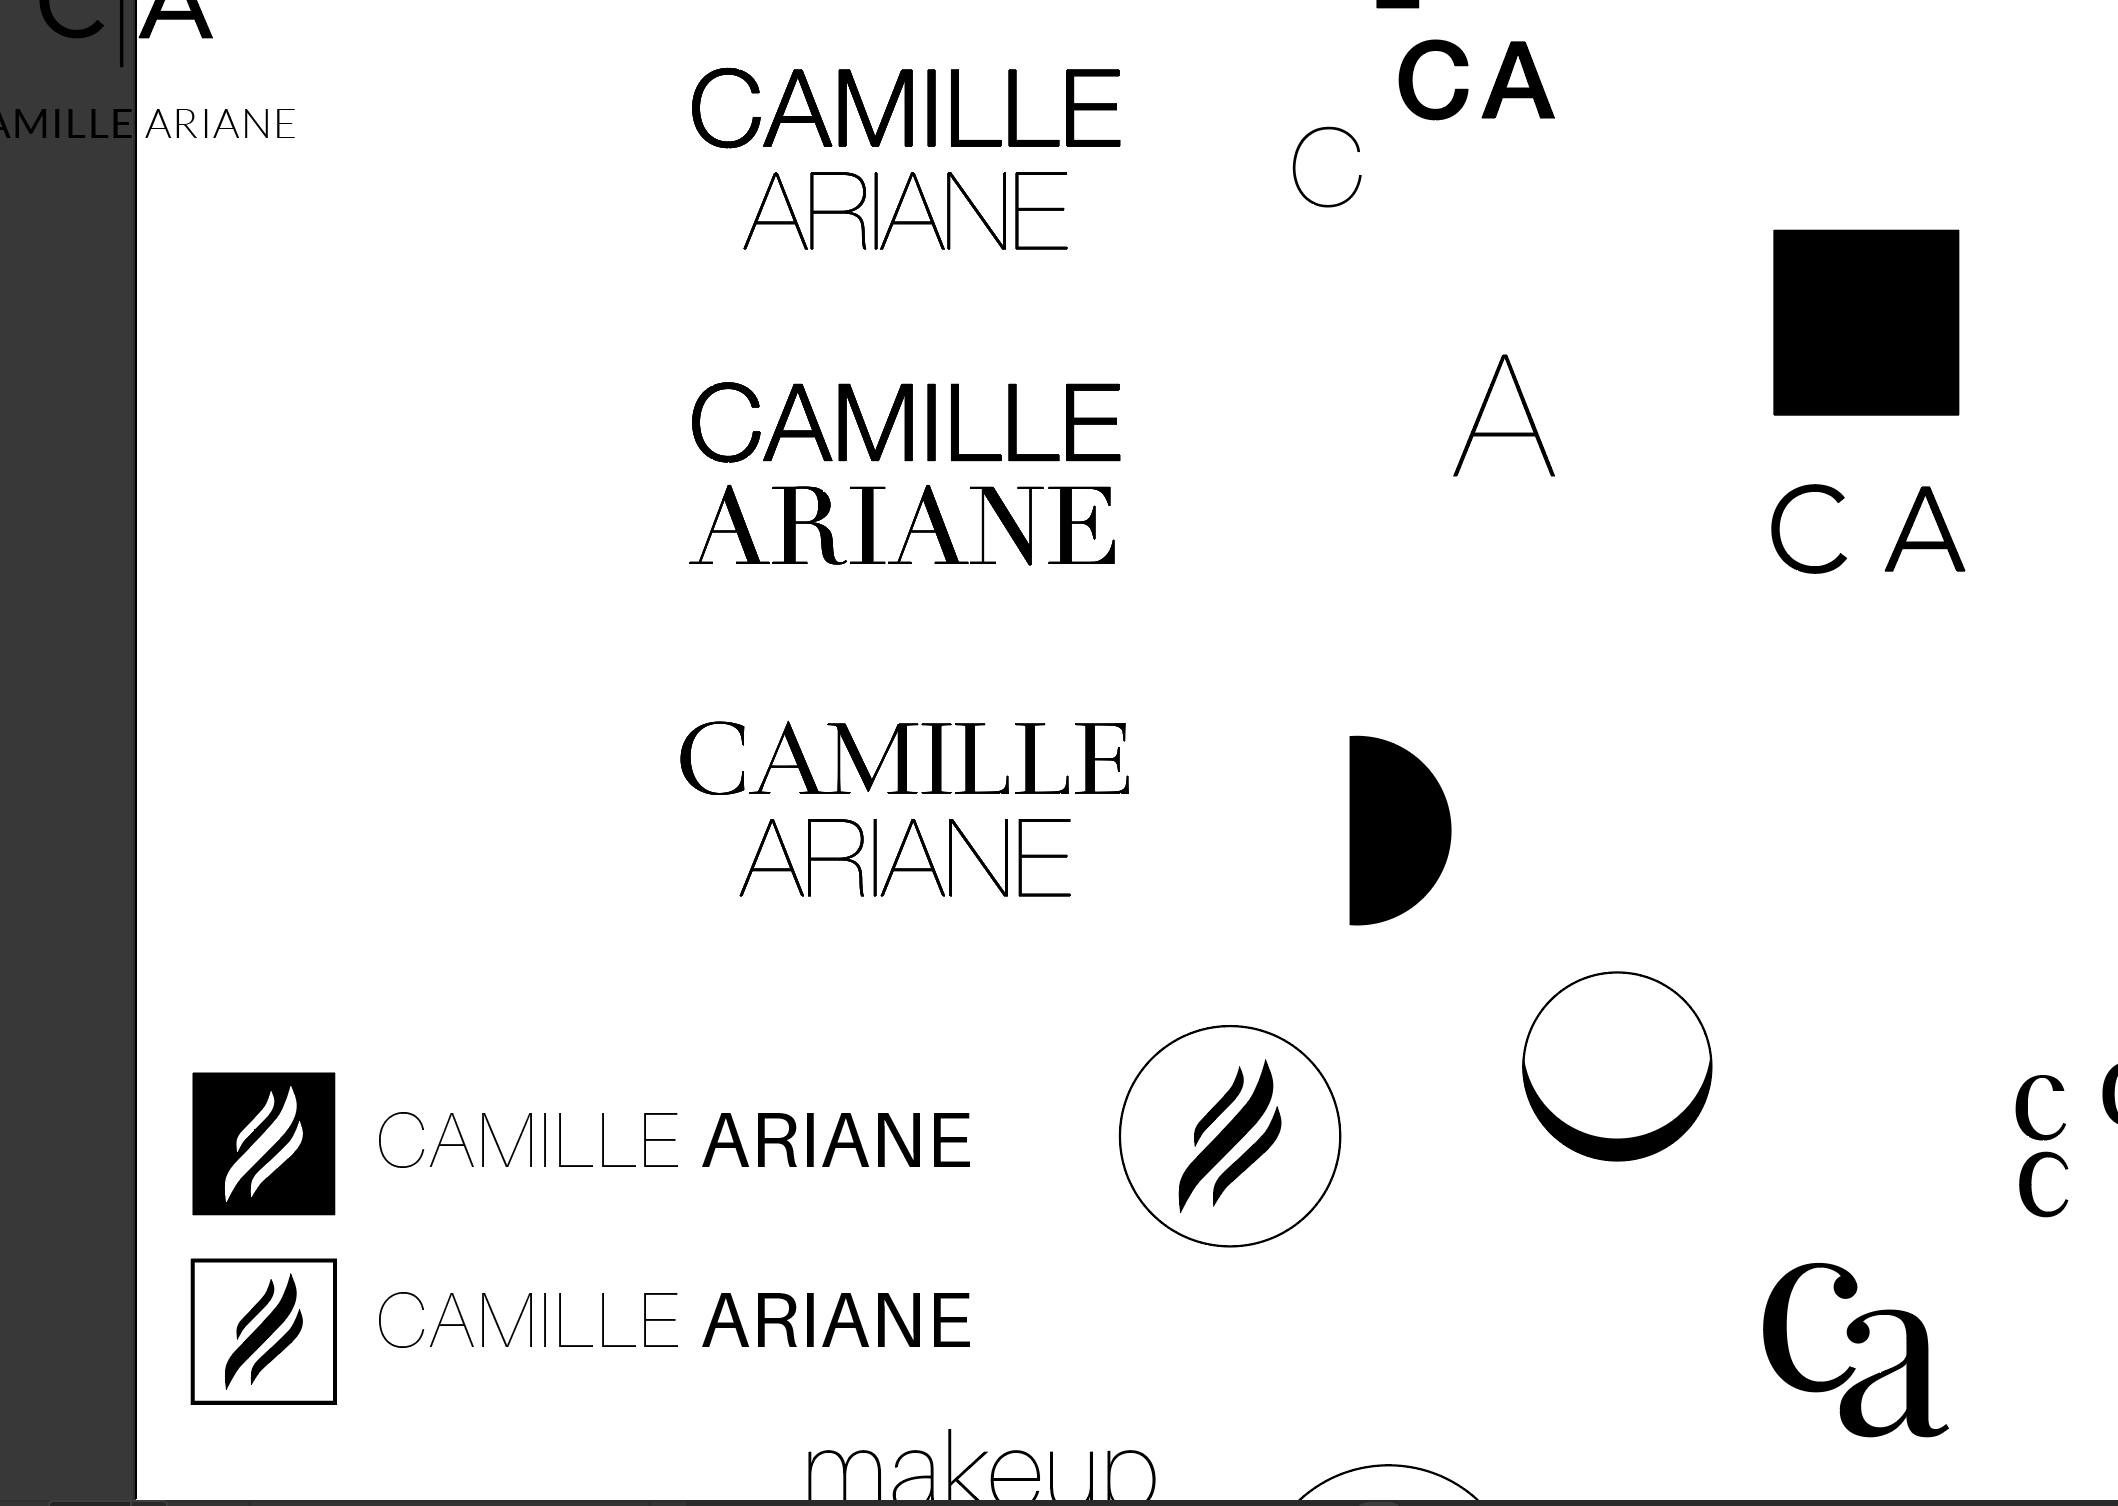 abdcamille-ariane-logo-space-2.png